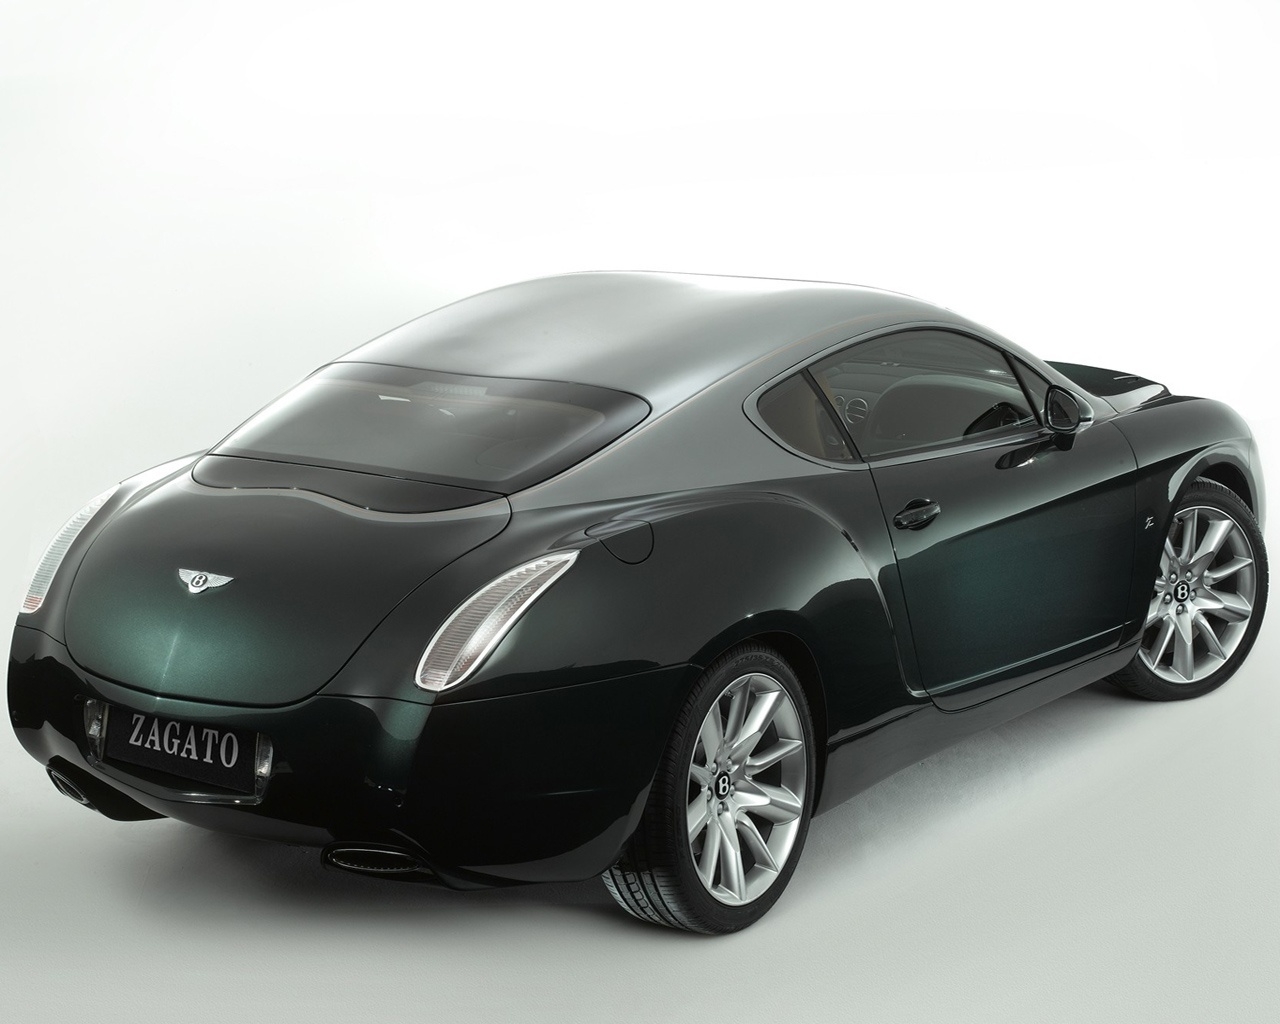 Bentley Zagato Rear for 1280 x 1024 resolution